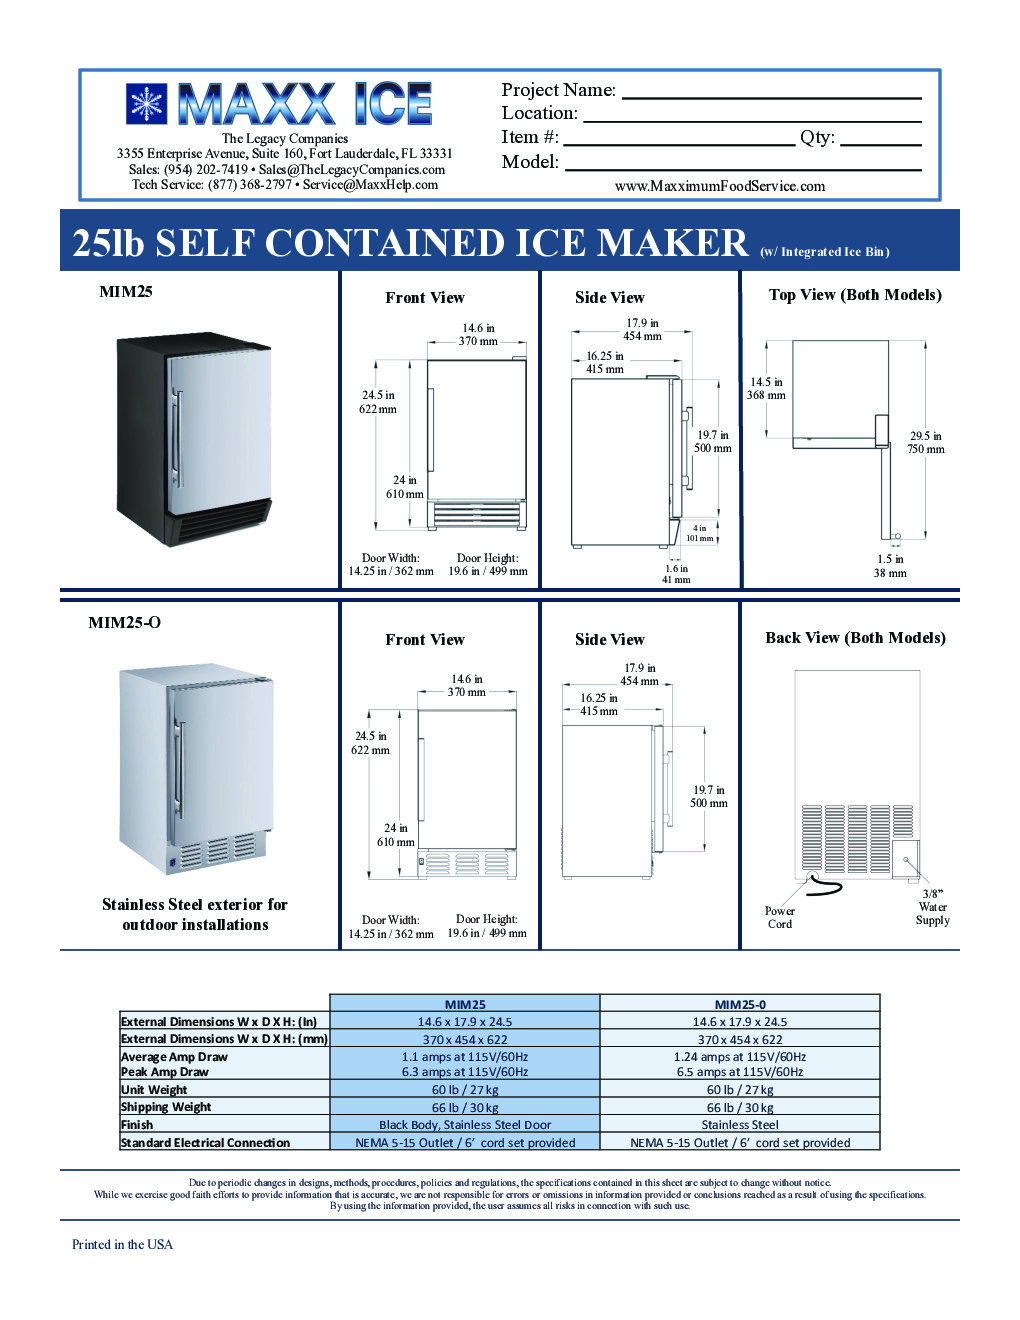 Maxx Ice MIM25 Undercounter Cube Ice Maker With Bin w/ 22-lb. Production & 12-lb. Storage